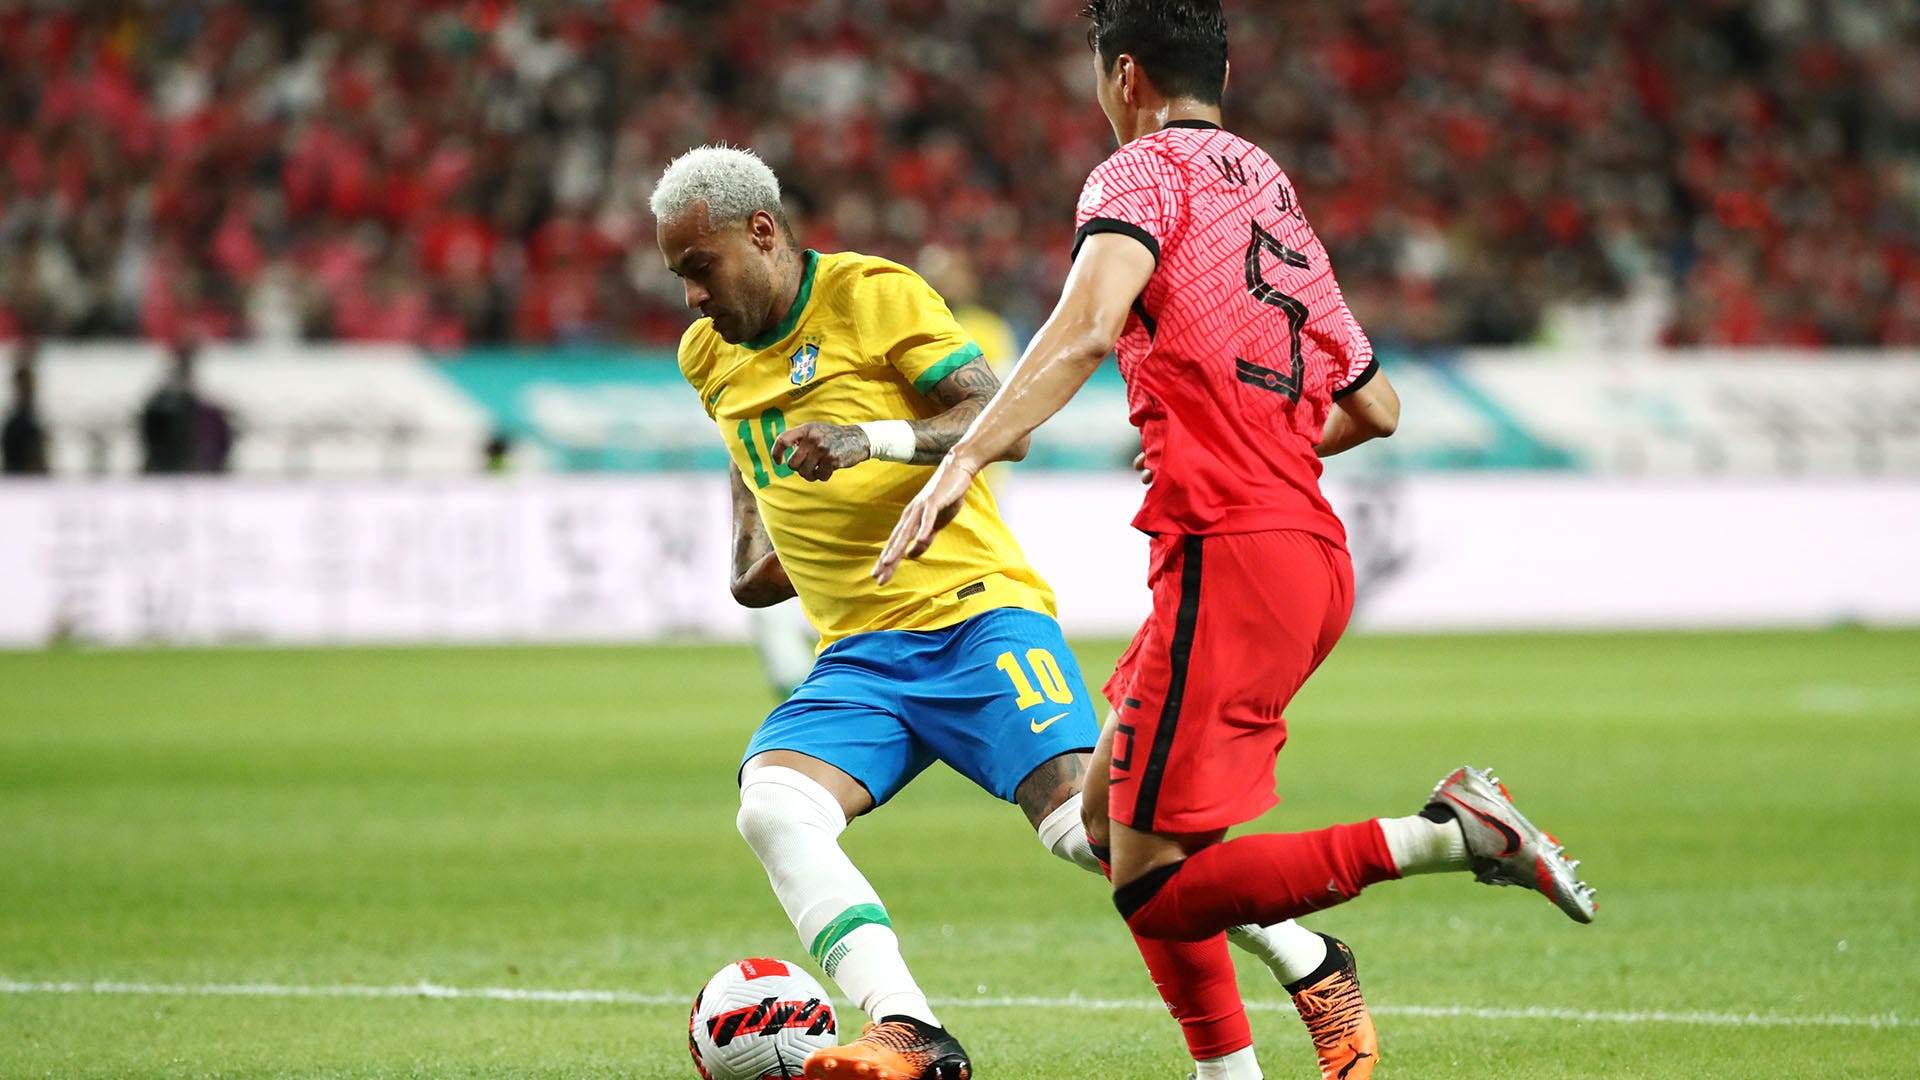 Brasil 3 x 0 Coreia do Sul - 19/11/19 - Amistoso - Futebol JP 